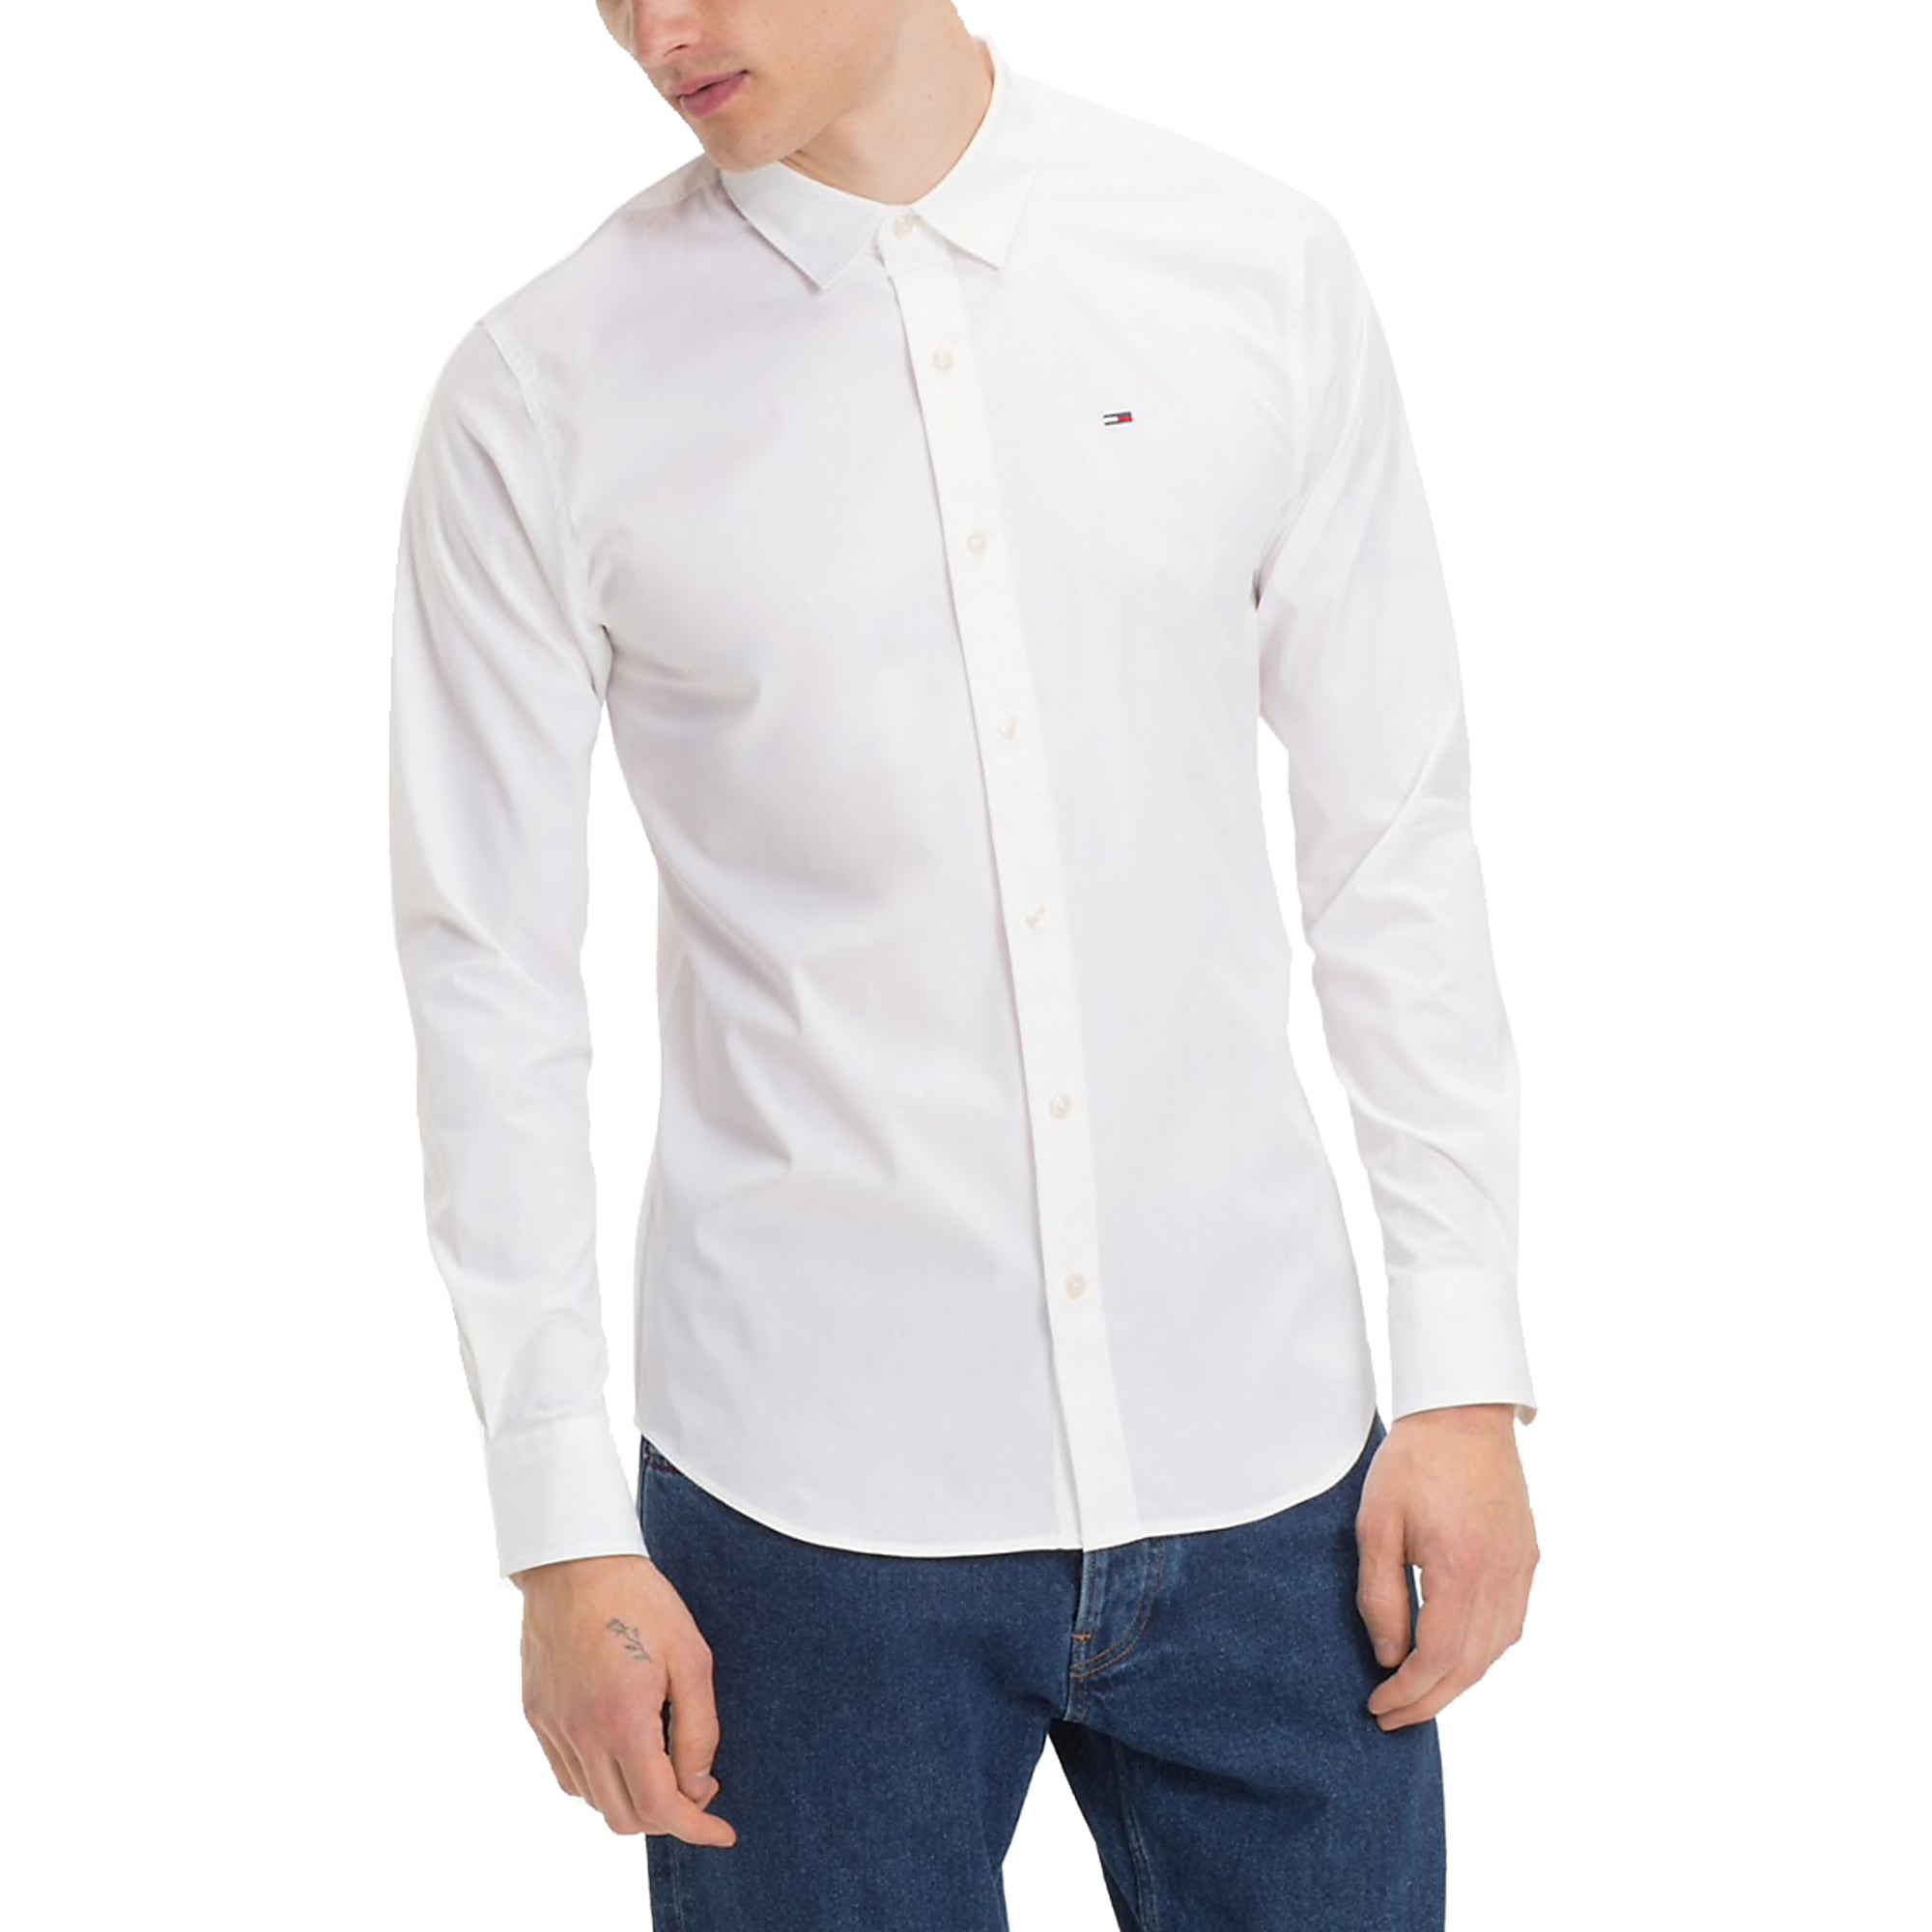 Tommy Hilfiger Original Flag Stretch Long Sleeve Shirt - White